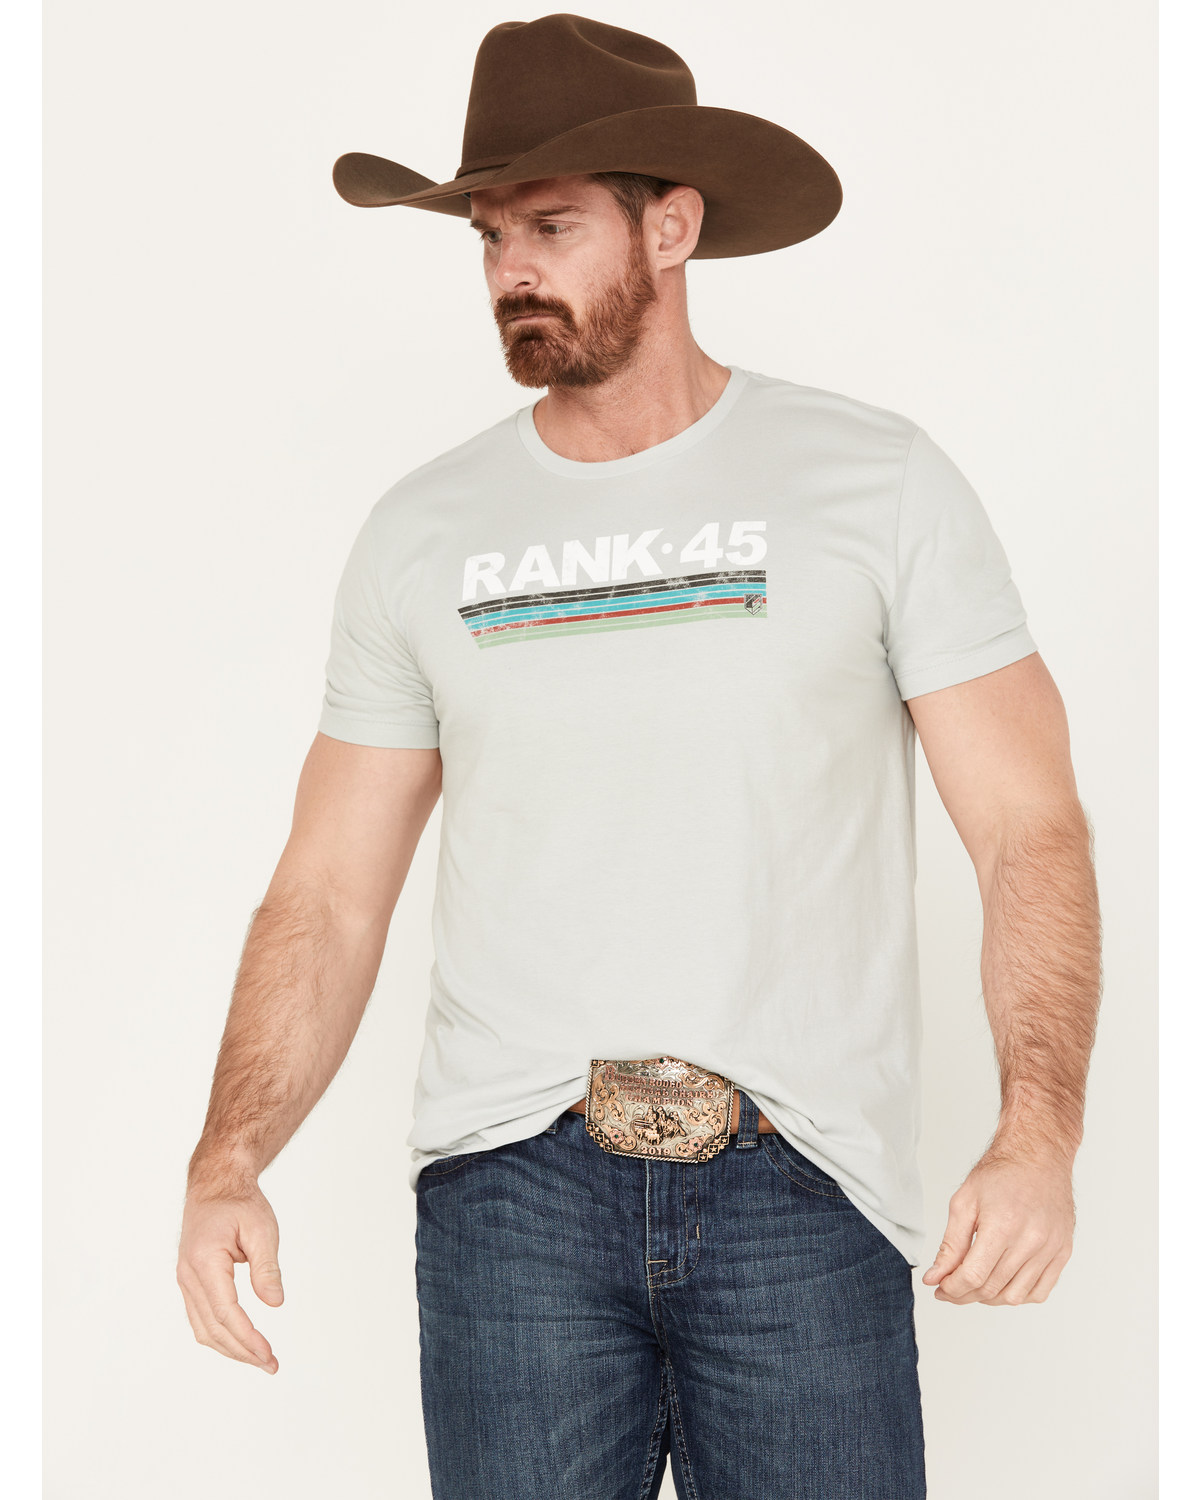 RANK 45® Men's Underlined Short Sleeve Graphic T-Shirt